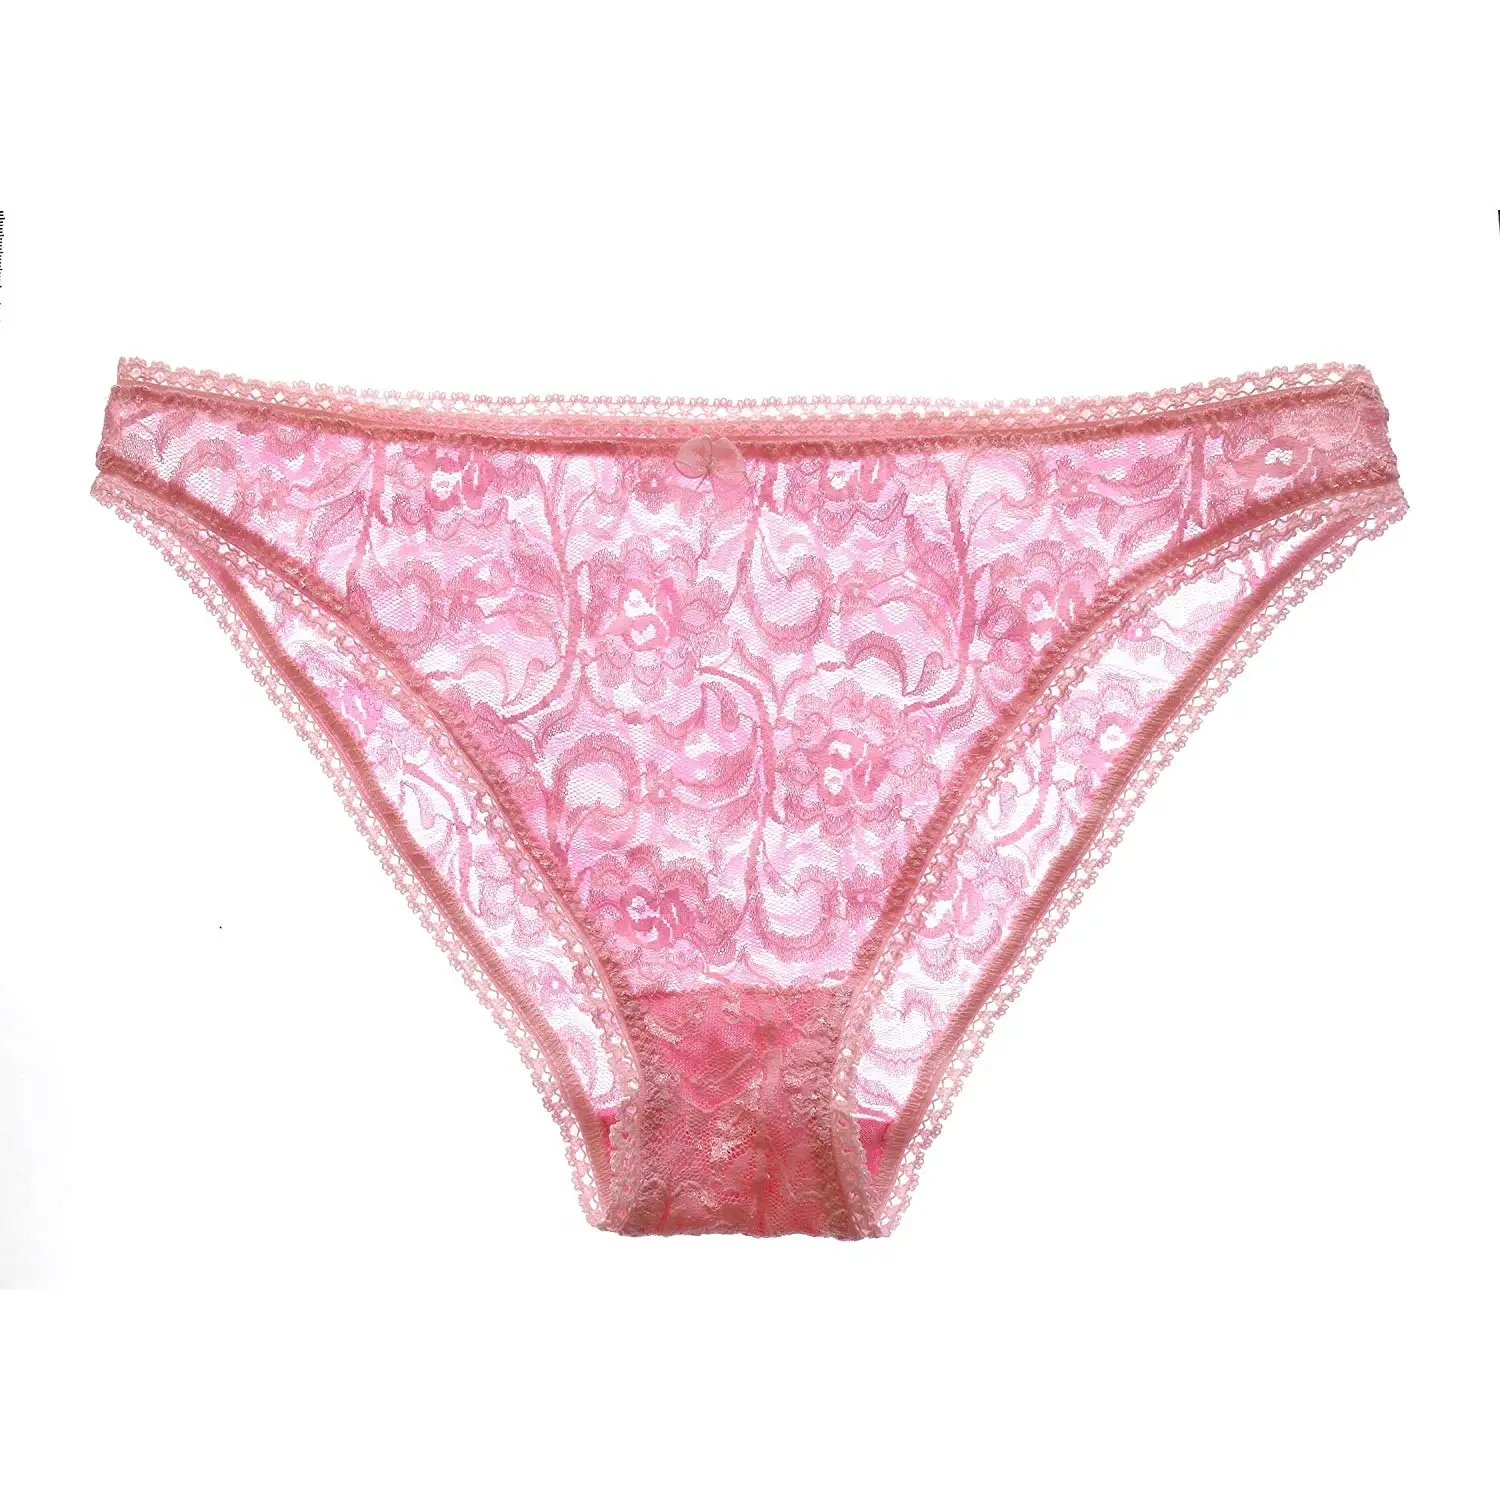 Pink Sheer Lace Panties. 